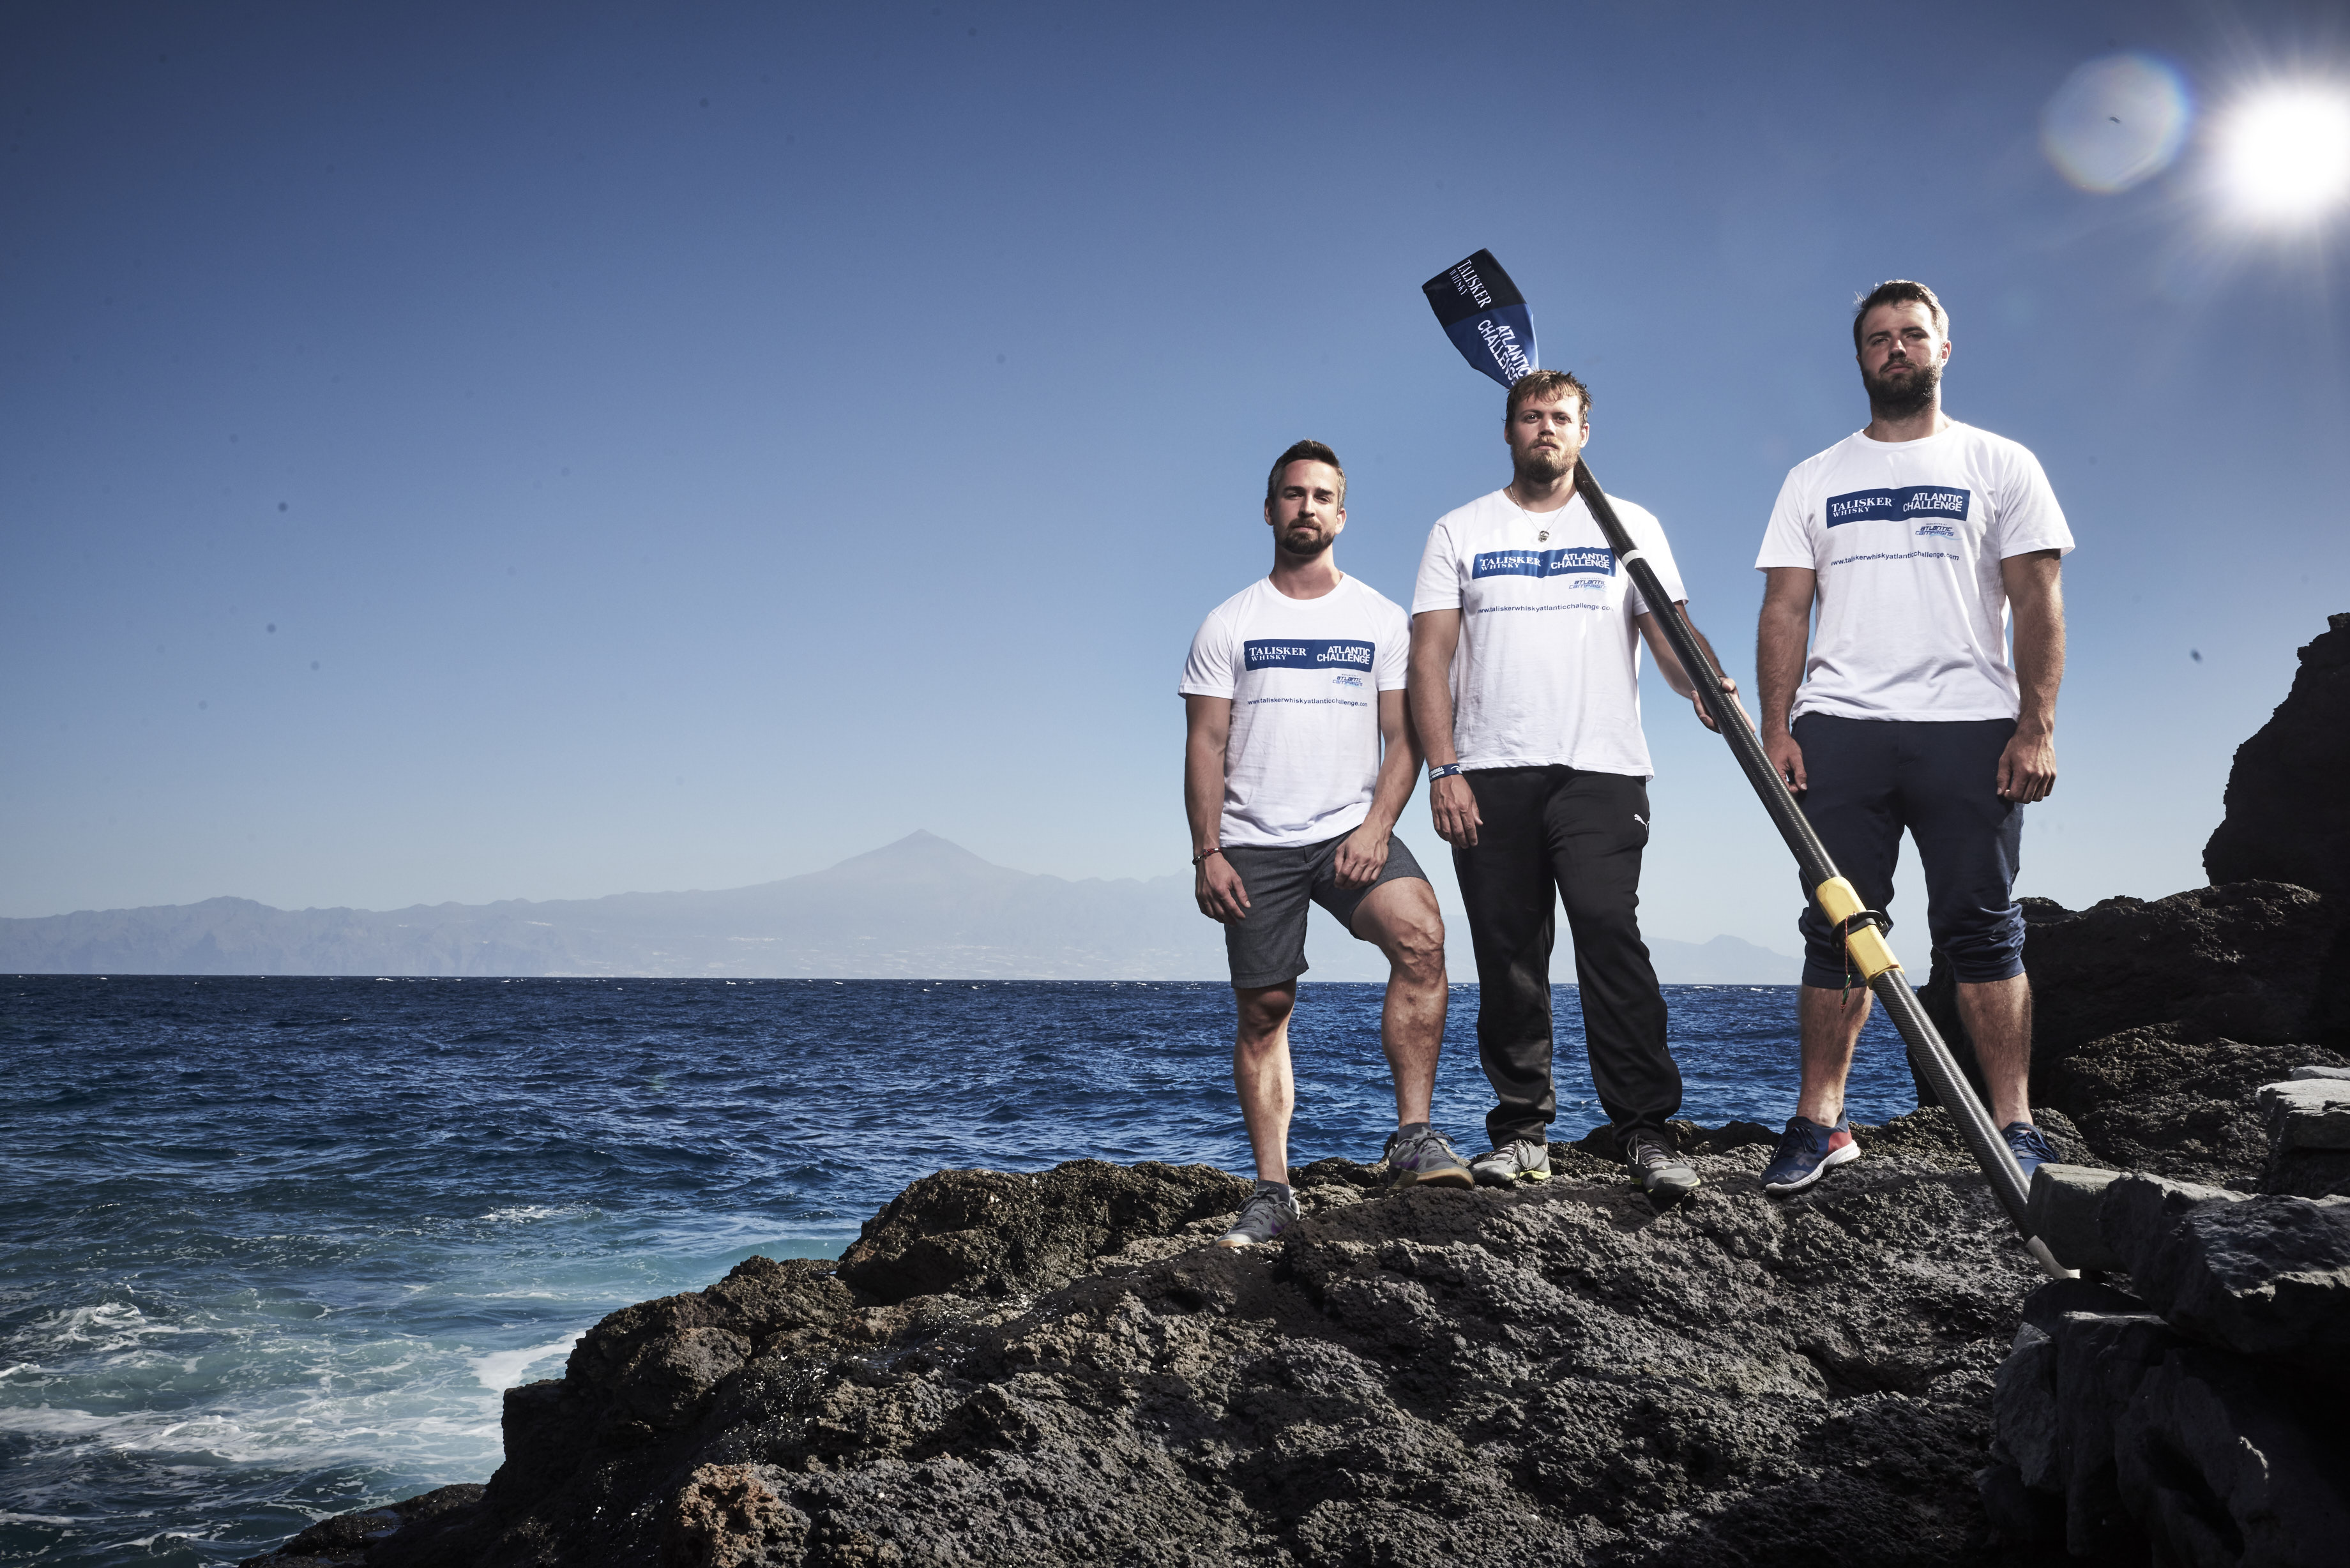 Team Shut Up & Row Set to Row Atlantic Ocean for The Big Fish